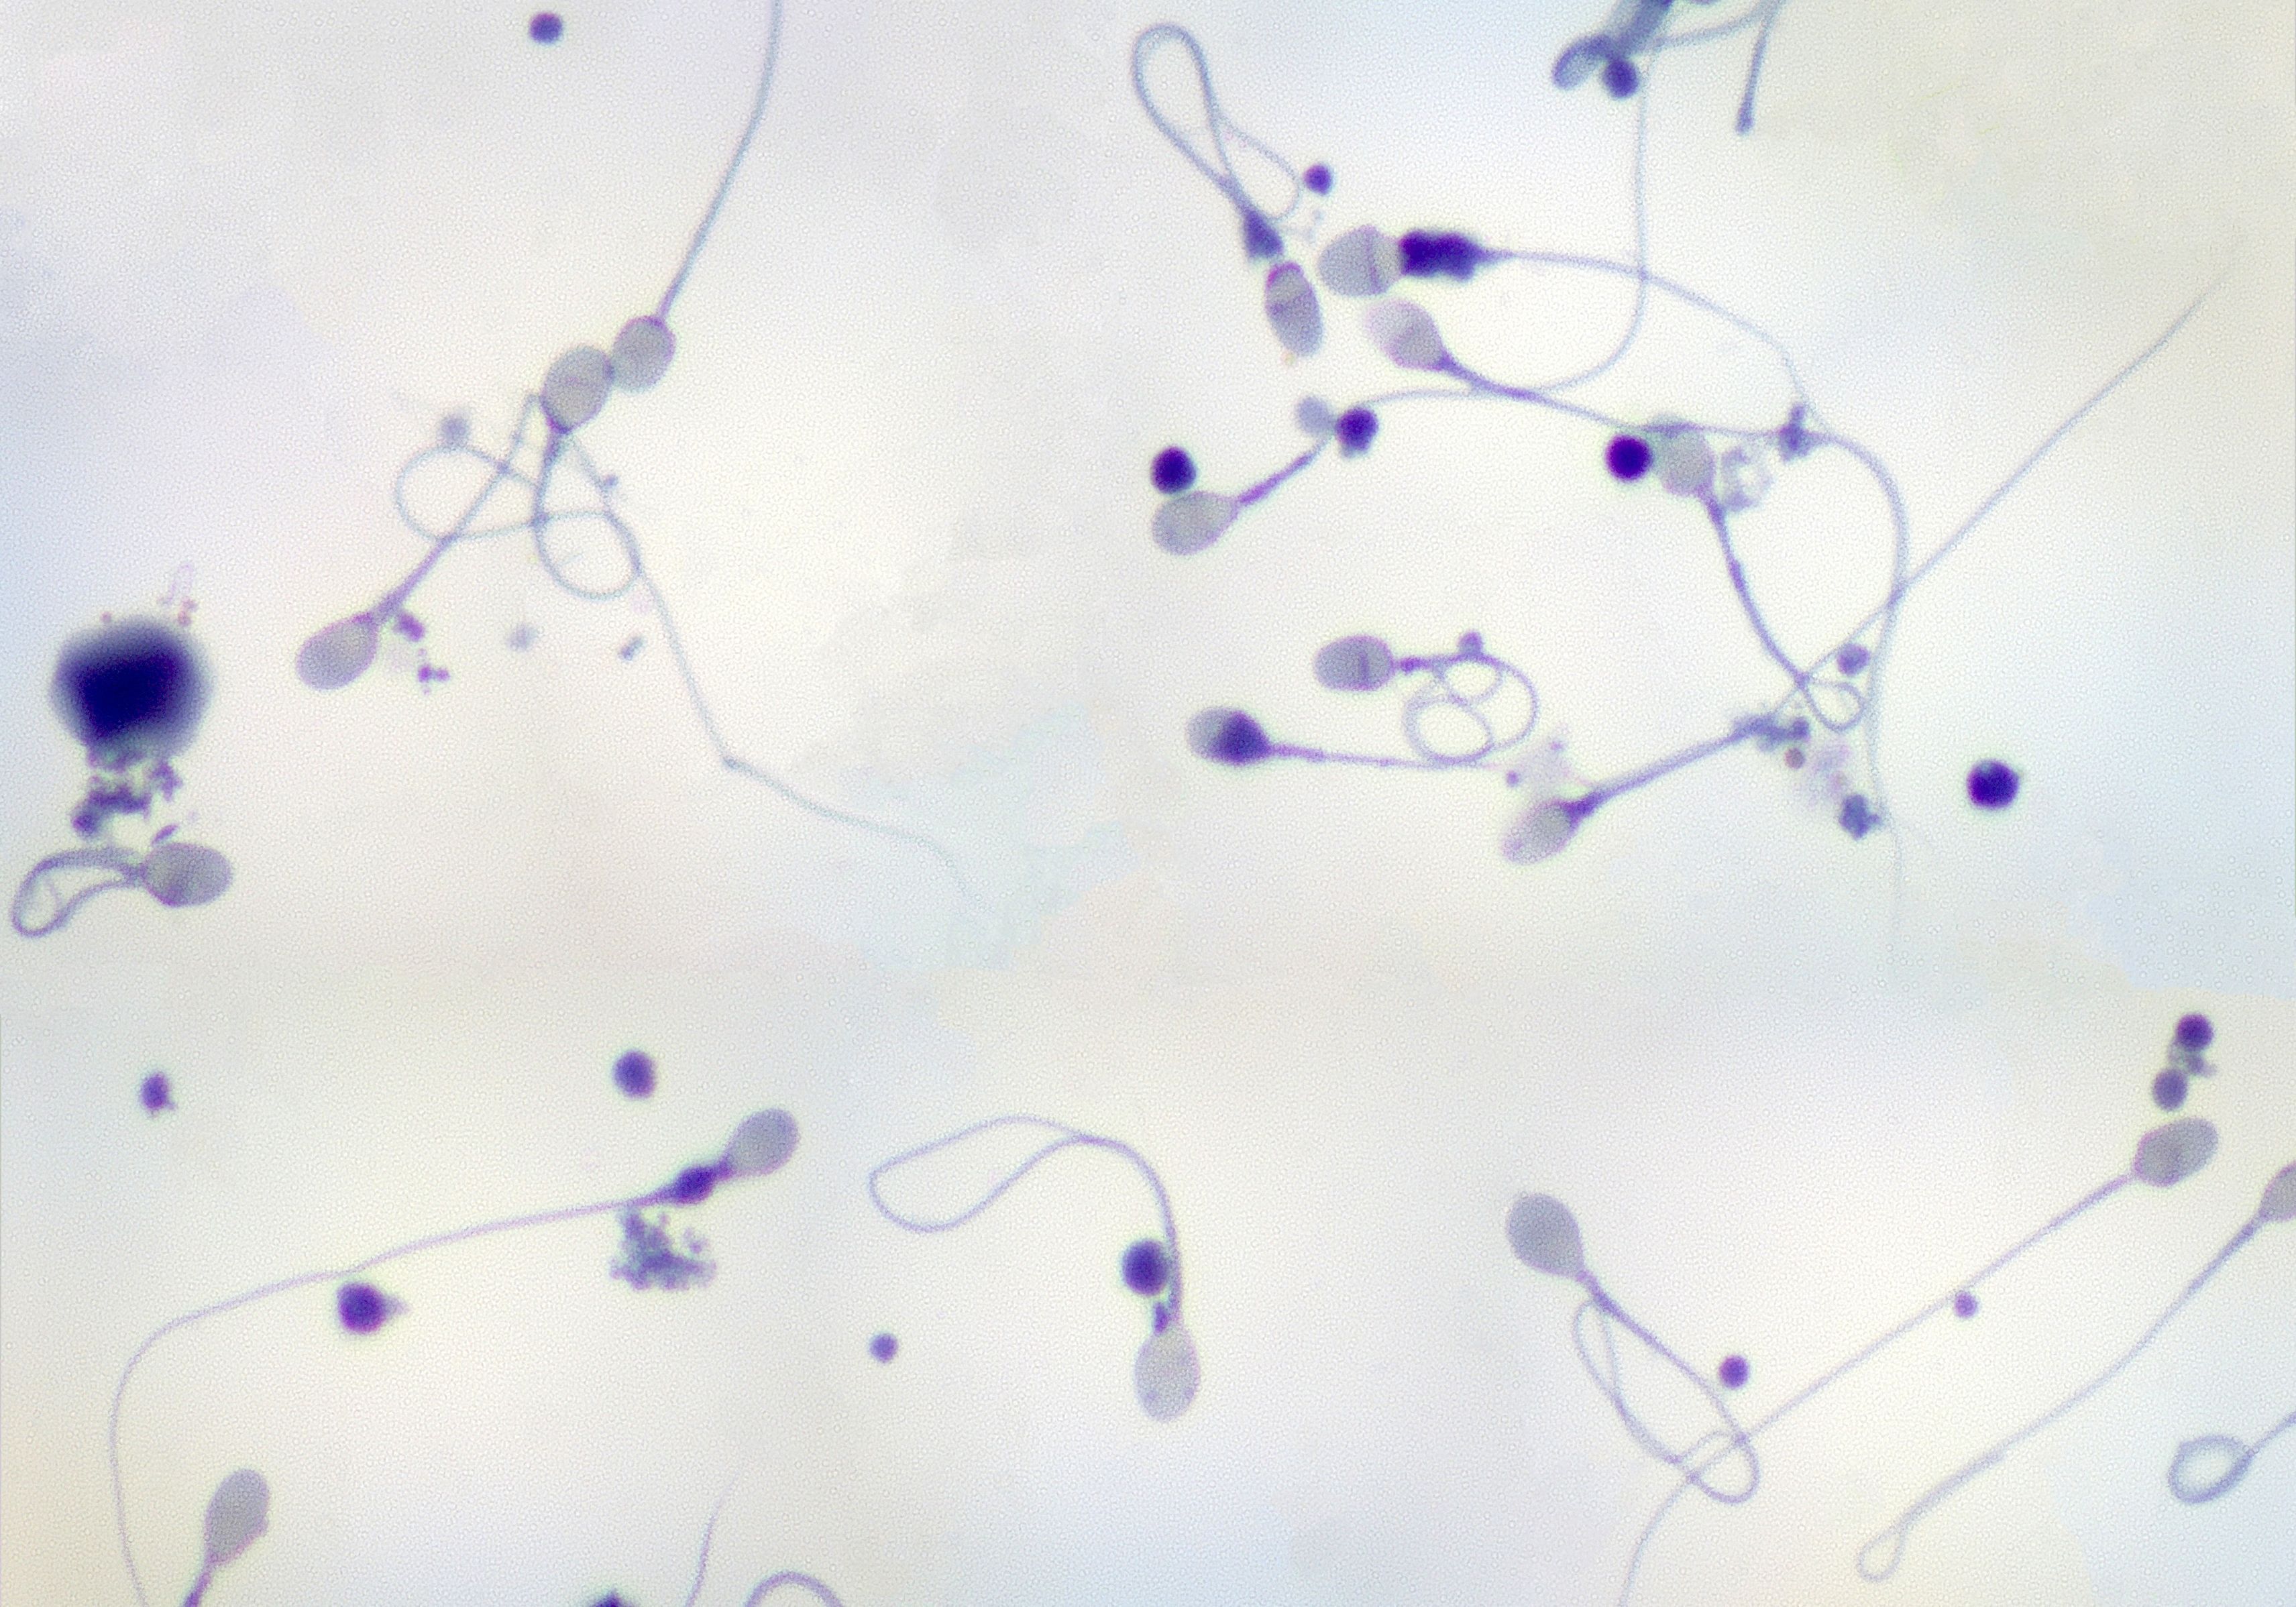 Sperm morphology cures